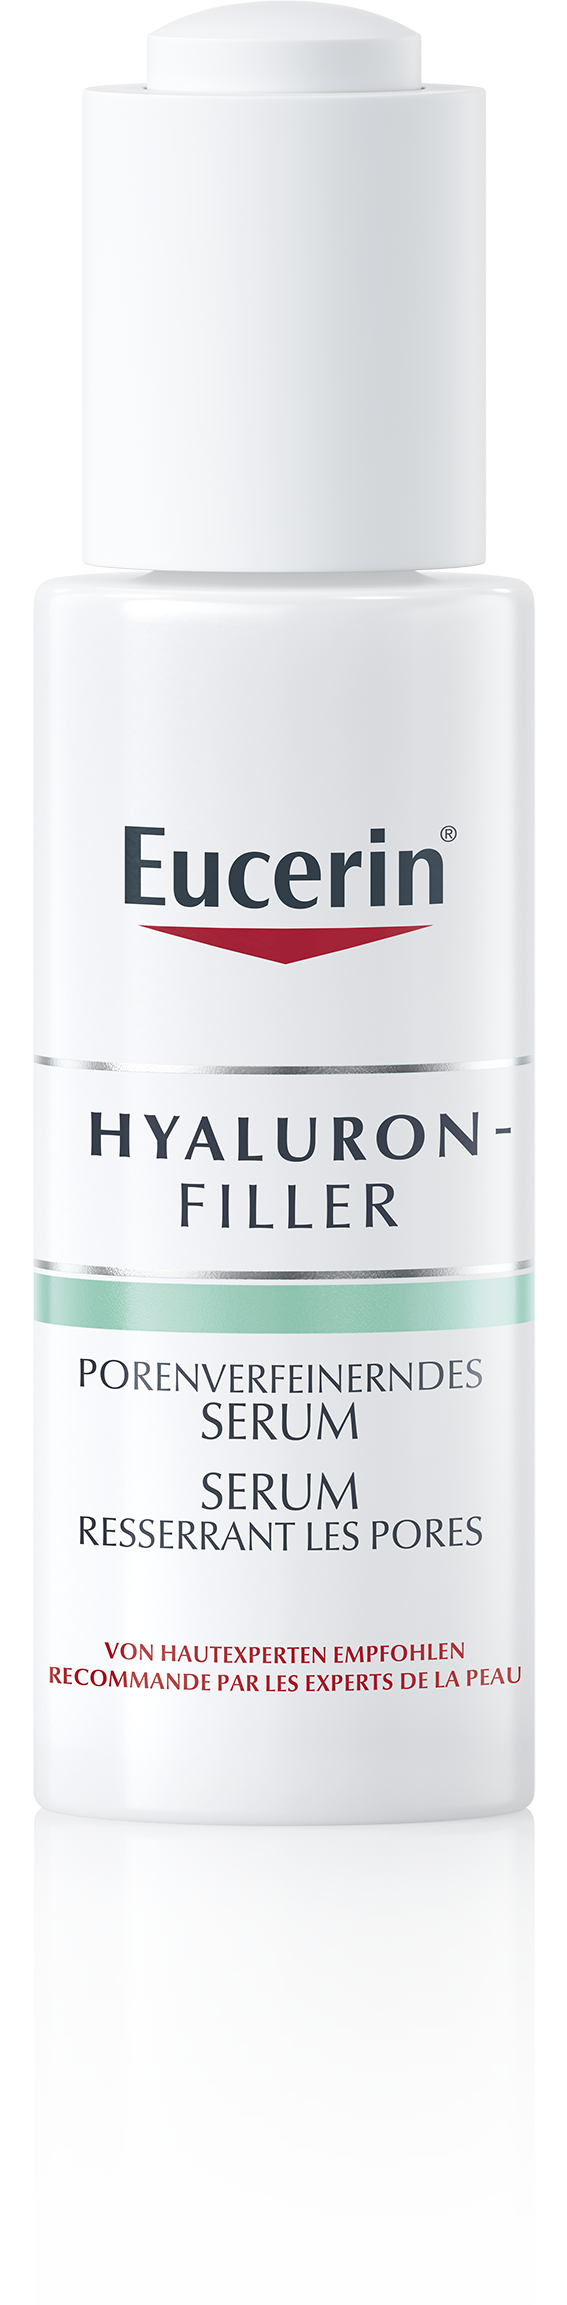 HYALURON-FILLER sérum